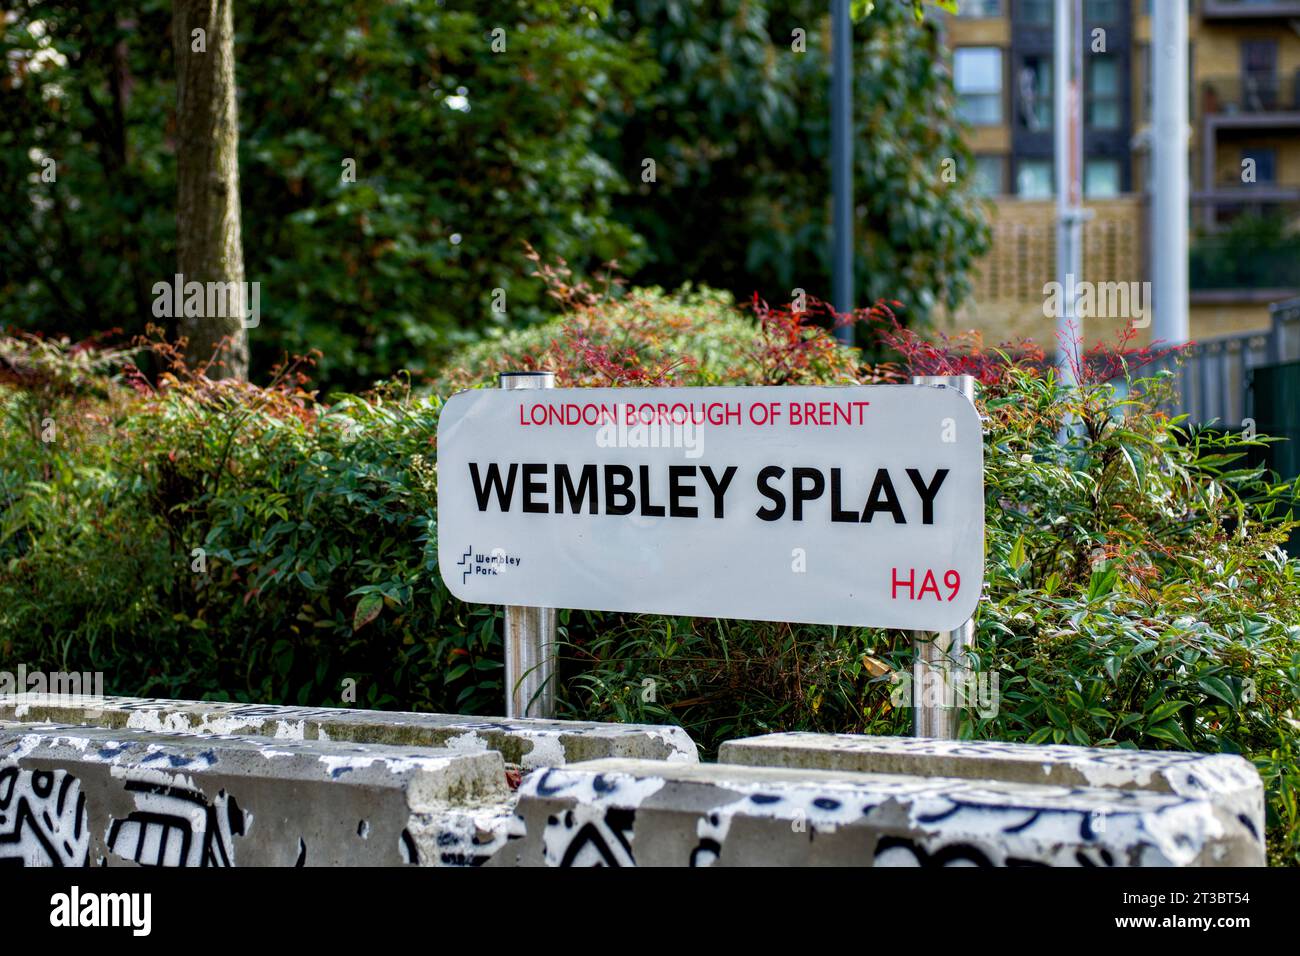 Wembley Splay street sign, Market Square, Wembley Park, Borough of Brent, London, England, UK Stock Photo